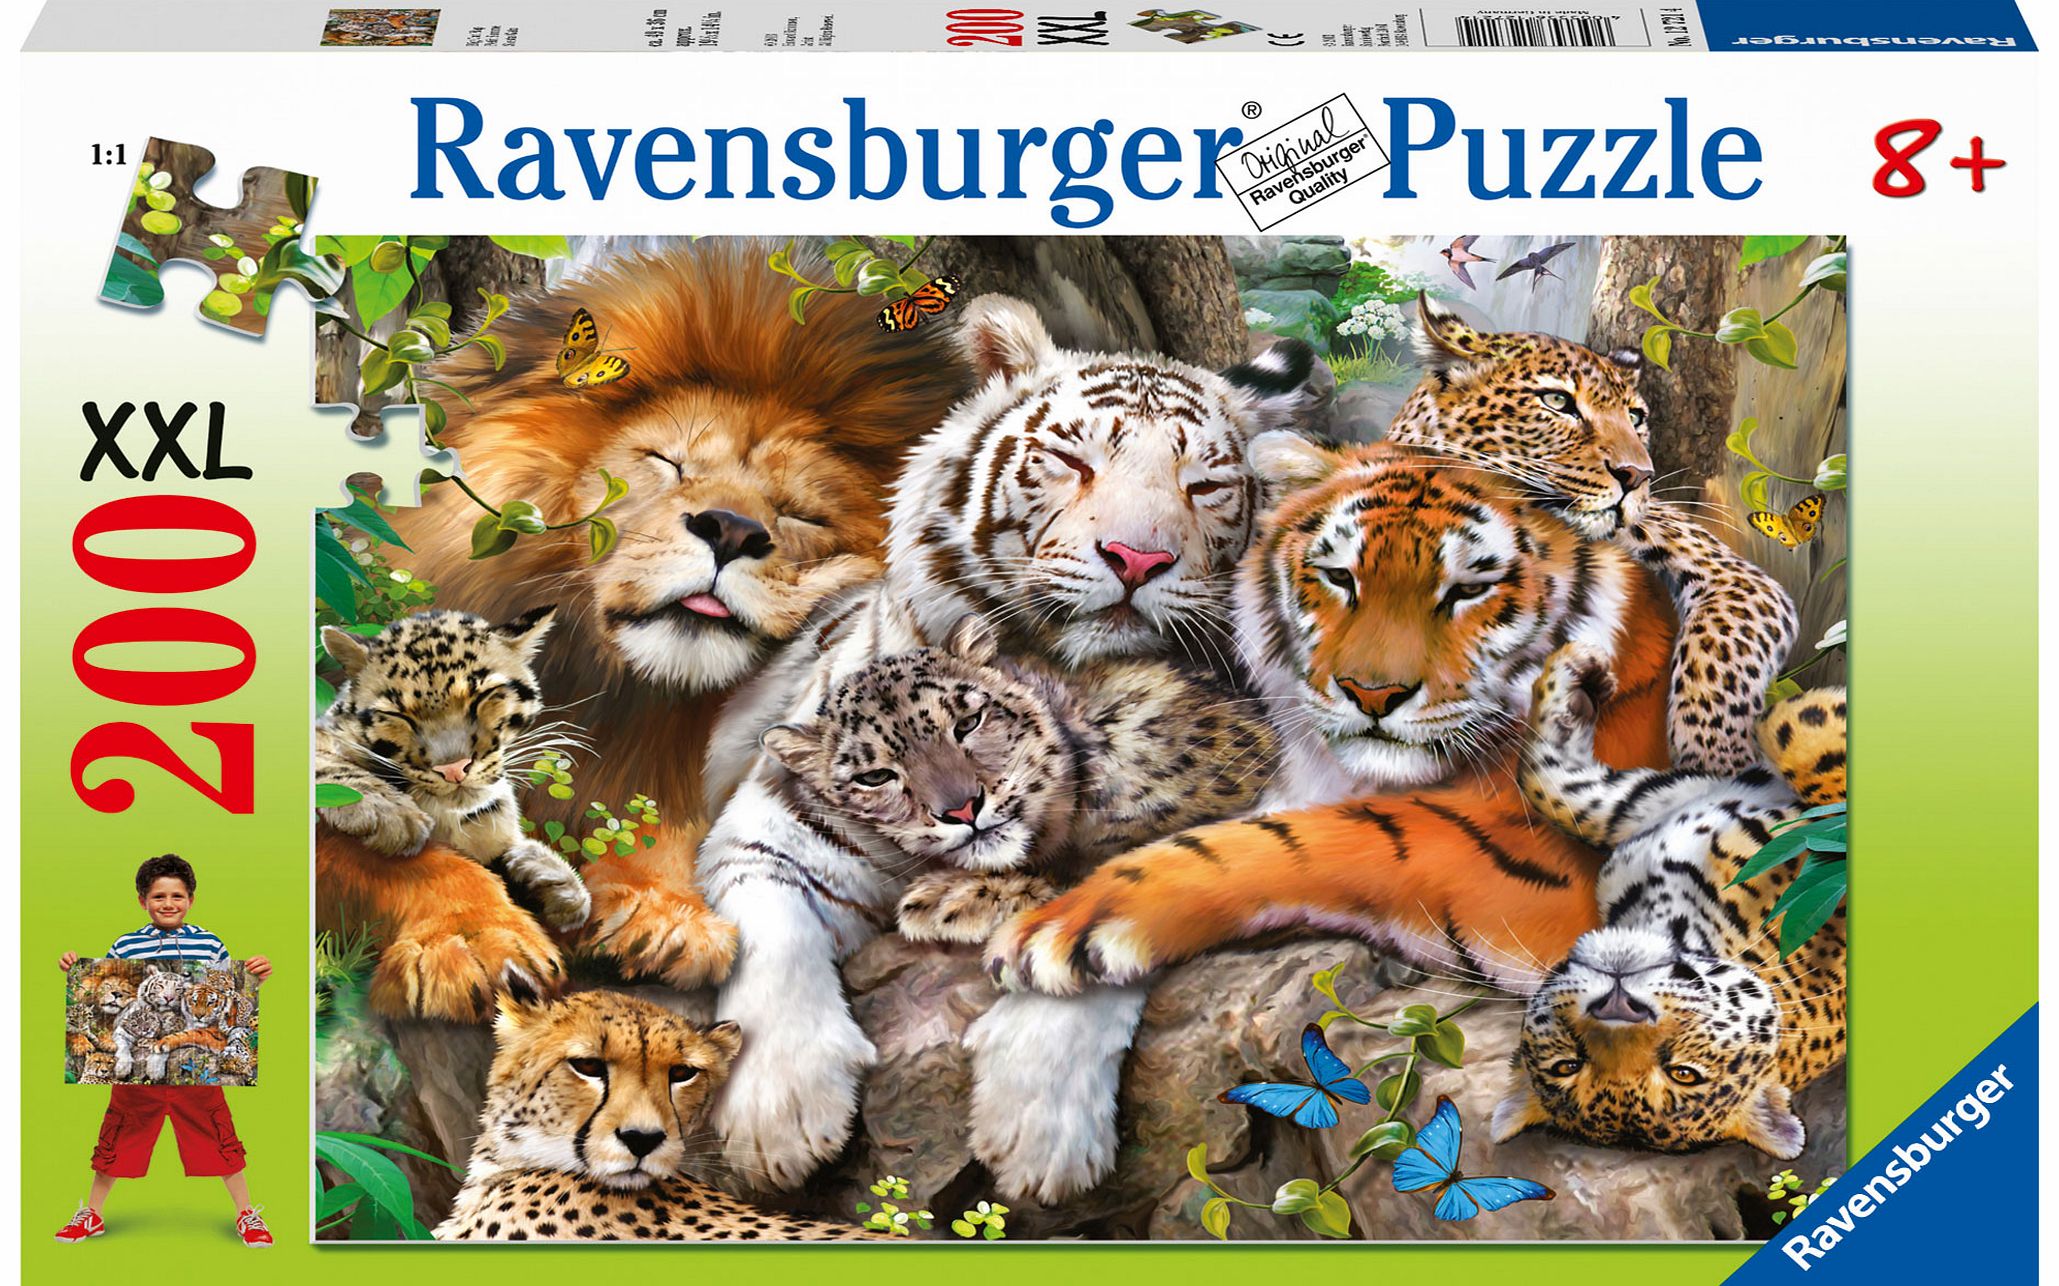 Ravensburger Big Cat Nap 200 Piece Jigsaw Puzzle - XXL